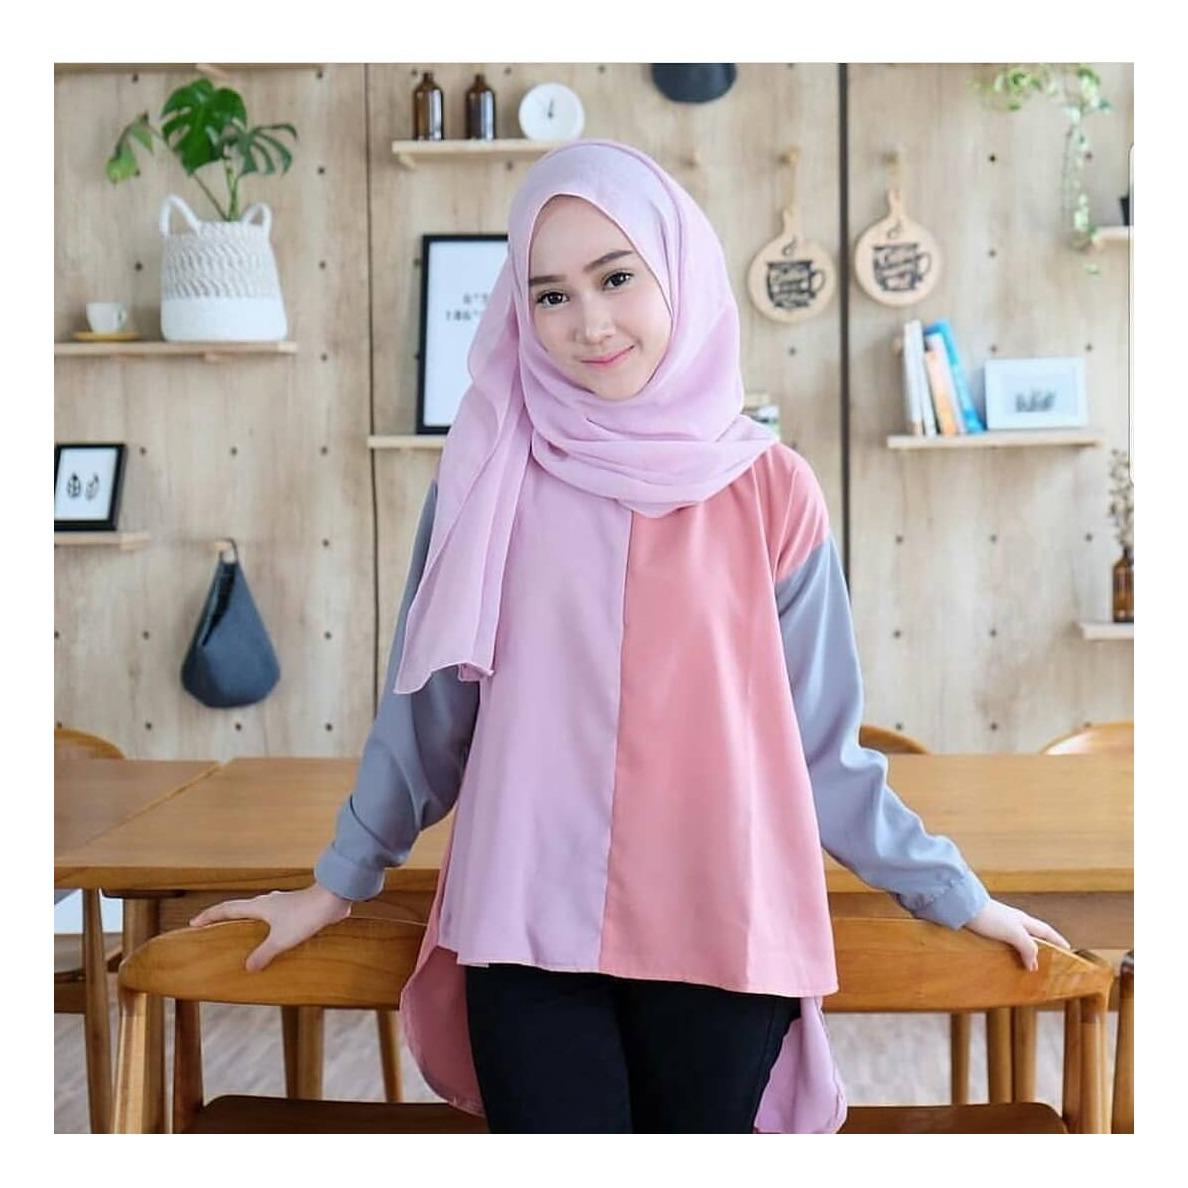 Baju Original Aisyah Blouse Balotely Pakaian Wanita Muslim Modern Atasan Cewek Muslimah Top Shirt Simple Trend 2018